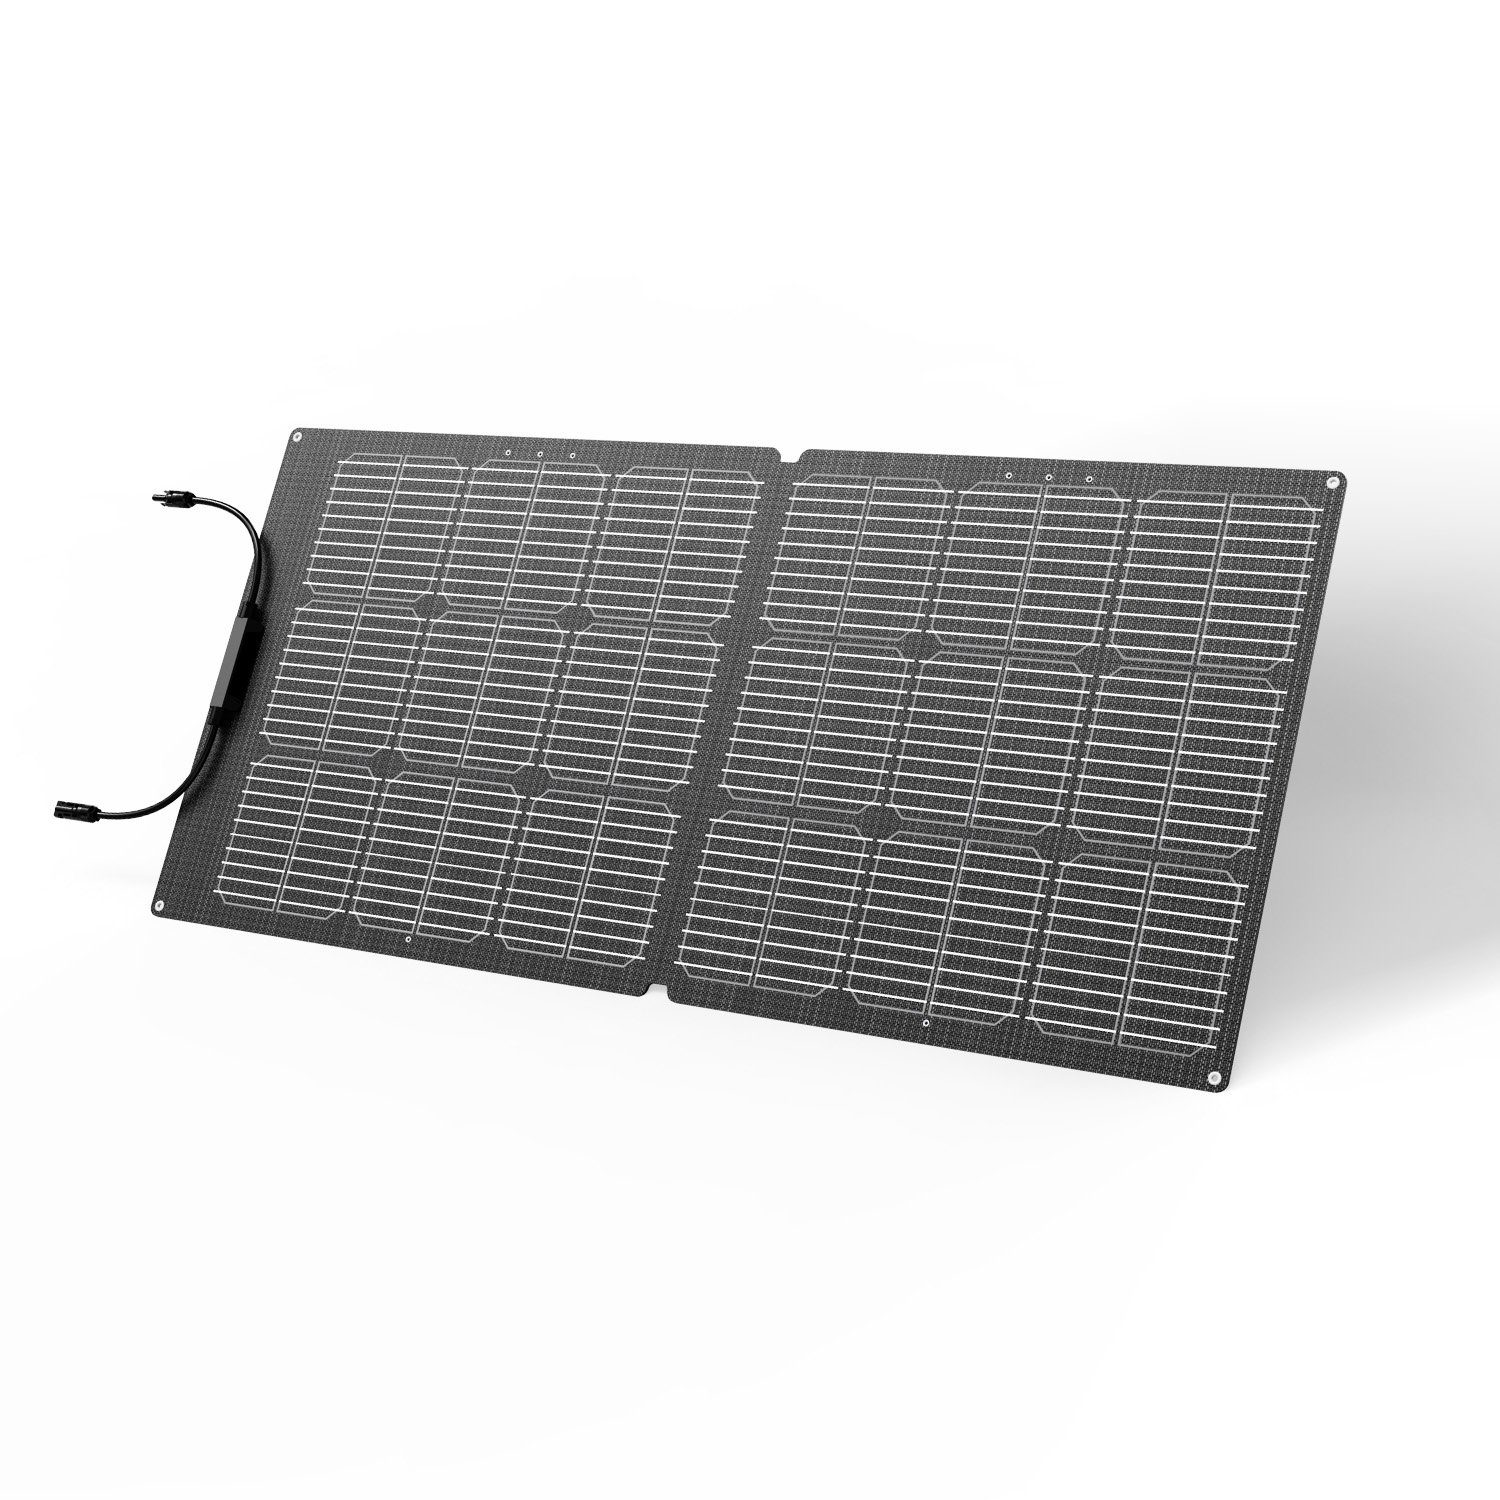 CITYSPORTS Solaranlage FULLSENT, Flexible Solarmodul 100/200W faltbar Balkonkraftwerk für PowerStation 100W